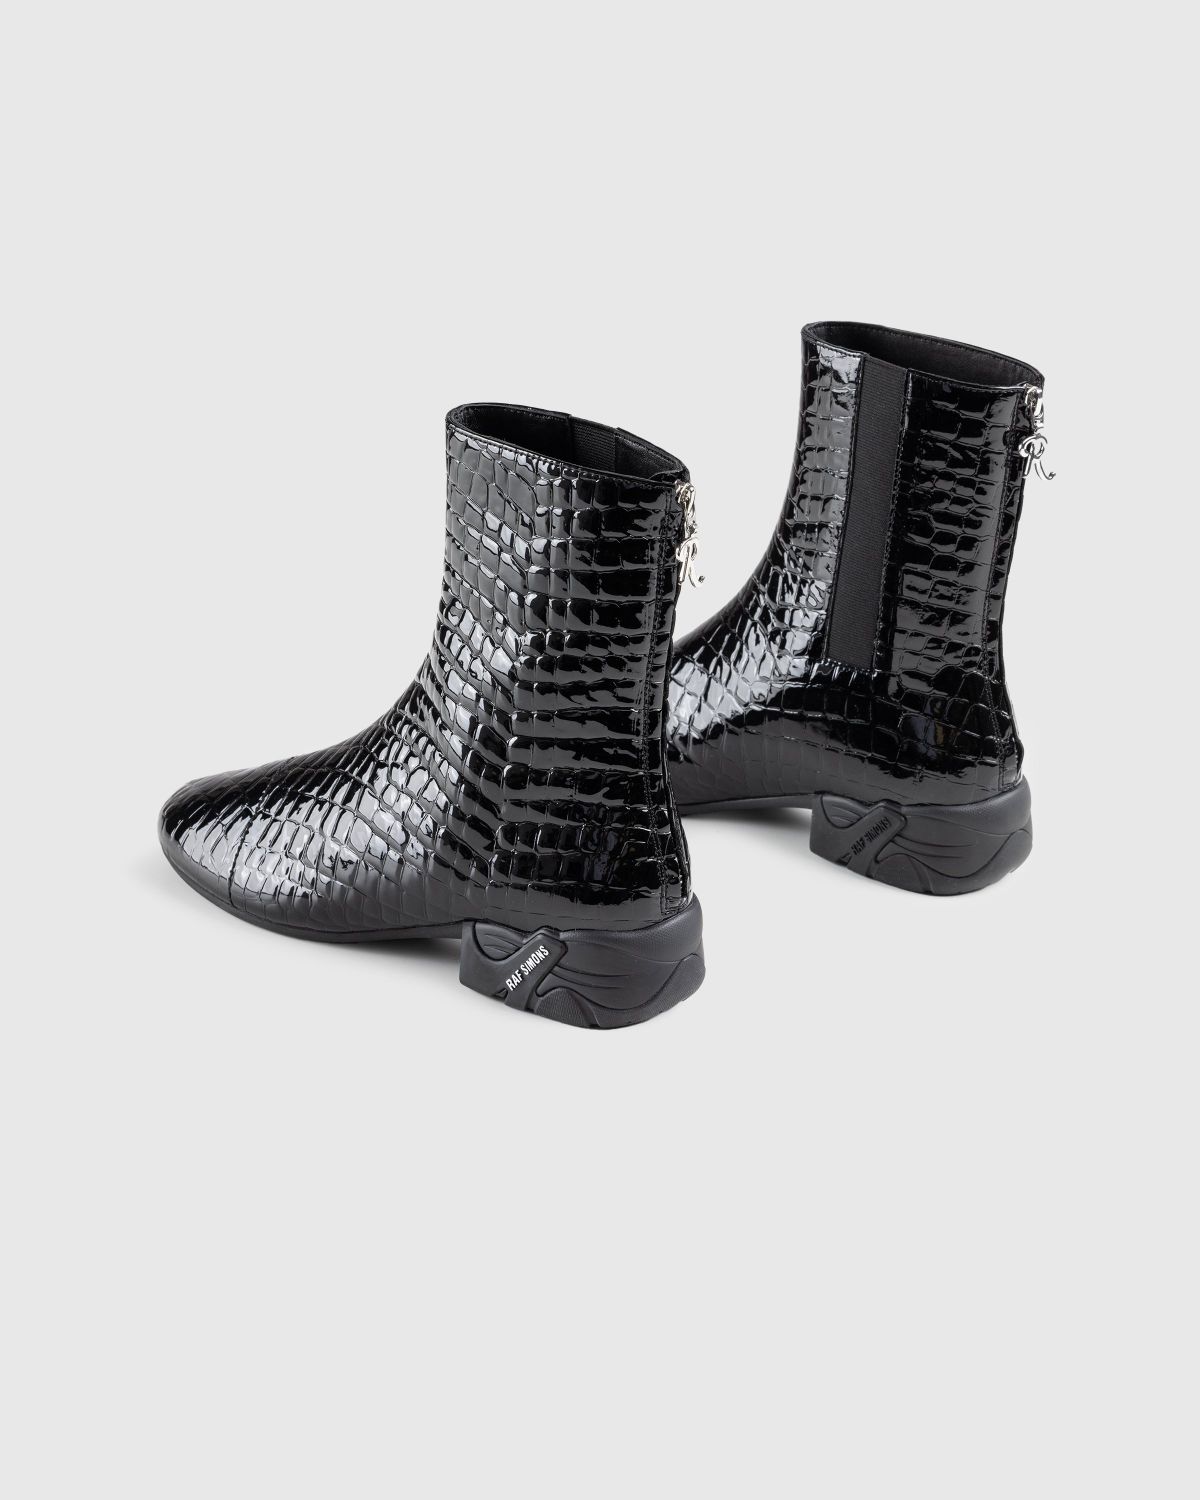 Raf Simons – Solaris High Leather Boot Black Croc - Boots - Black - Image 4